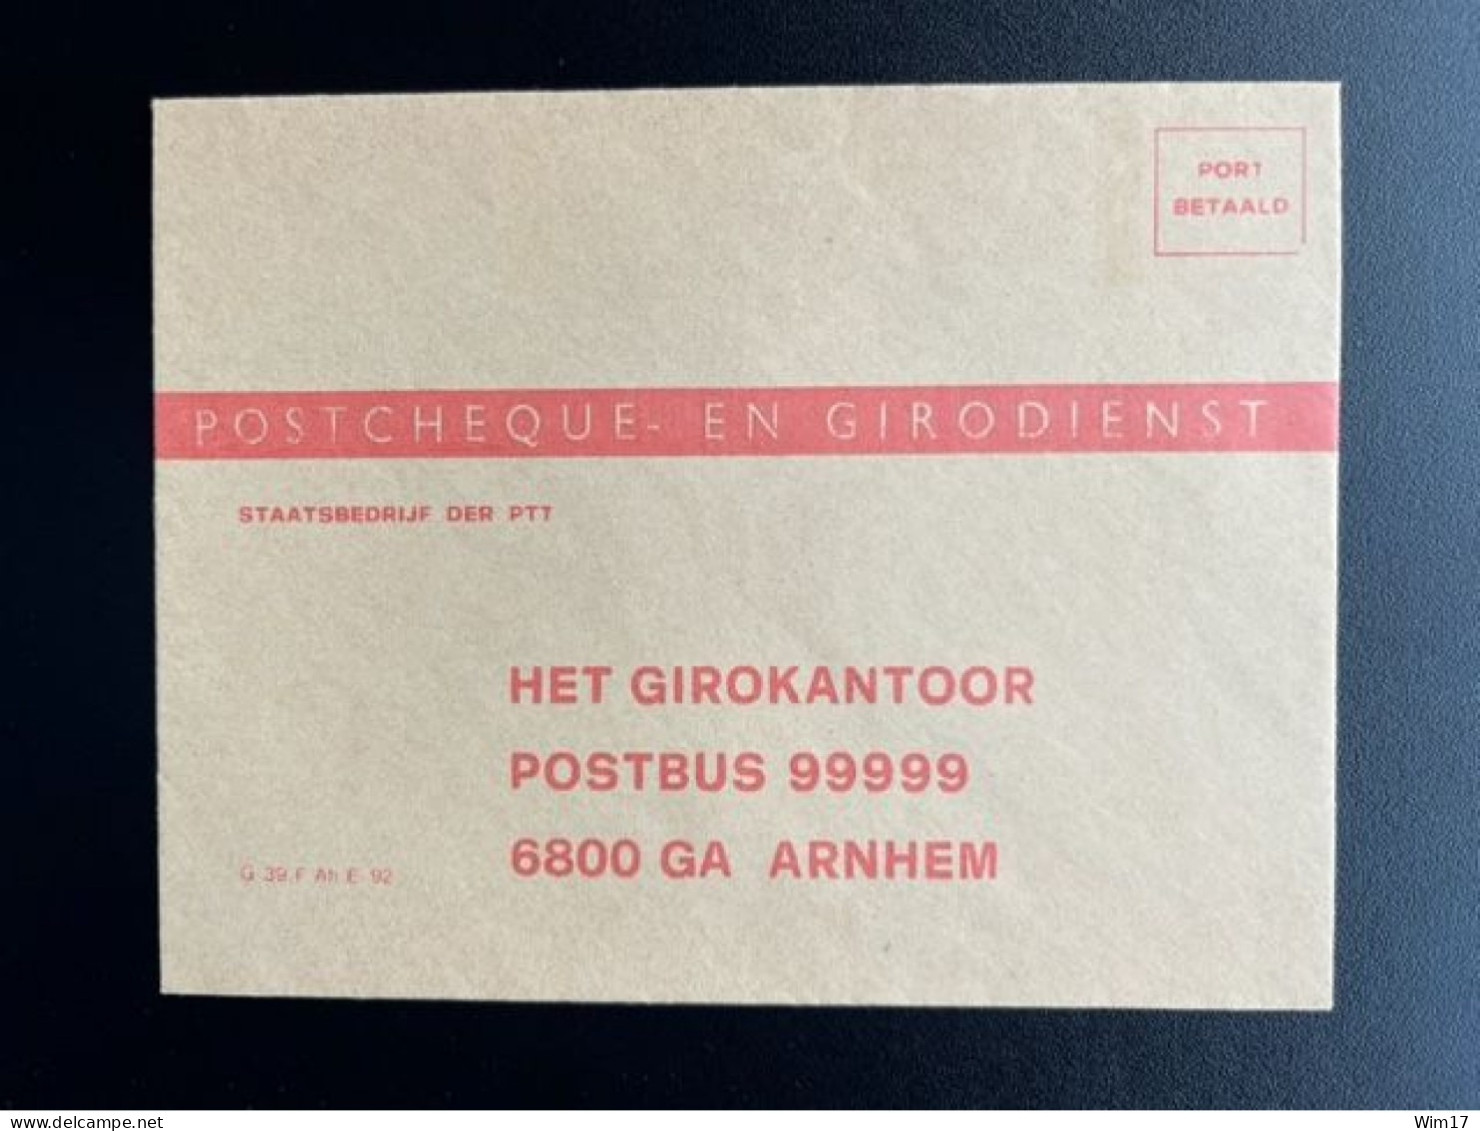 NETHERLANDS 19?? UNUSED ENVELOPE POSTCHEQUE- EN GIRODIENST NEDERLAND G 39 F AH E 92 - Storia Postale